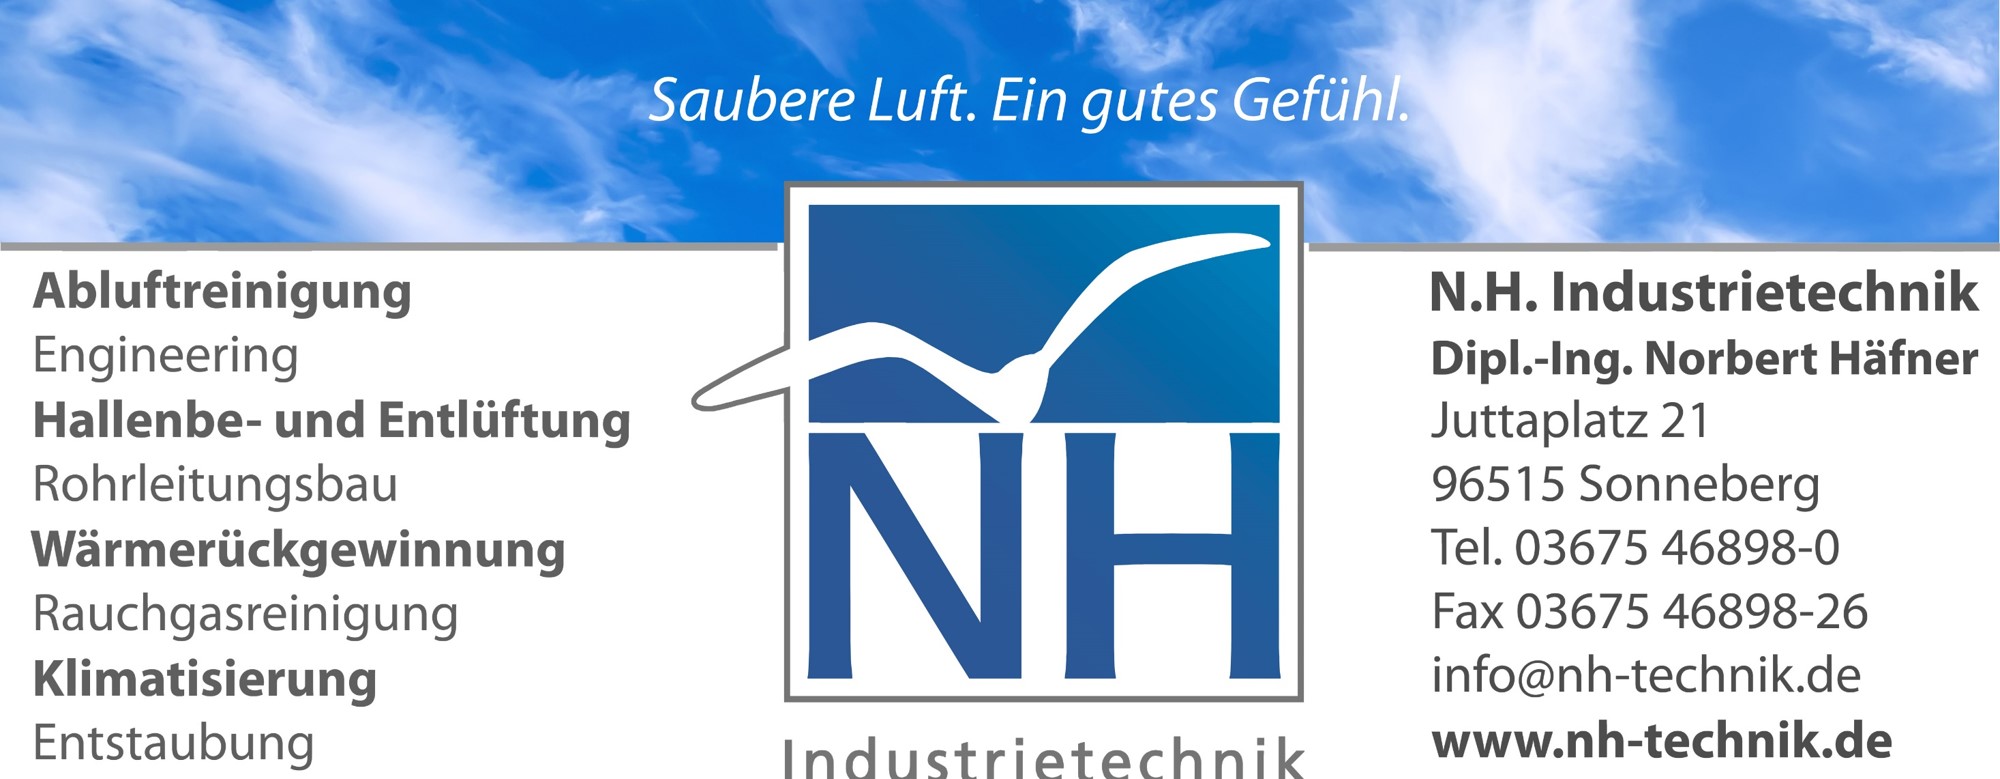 NH Industrietechnik